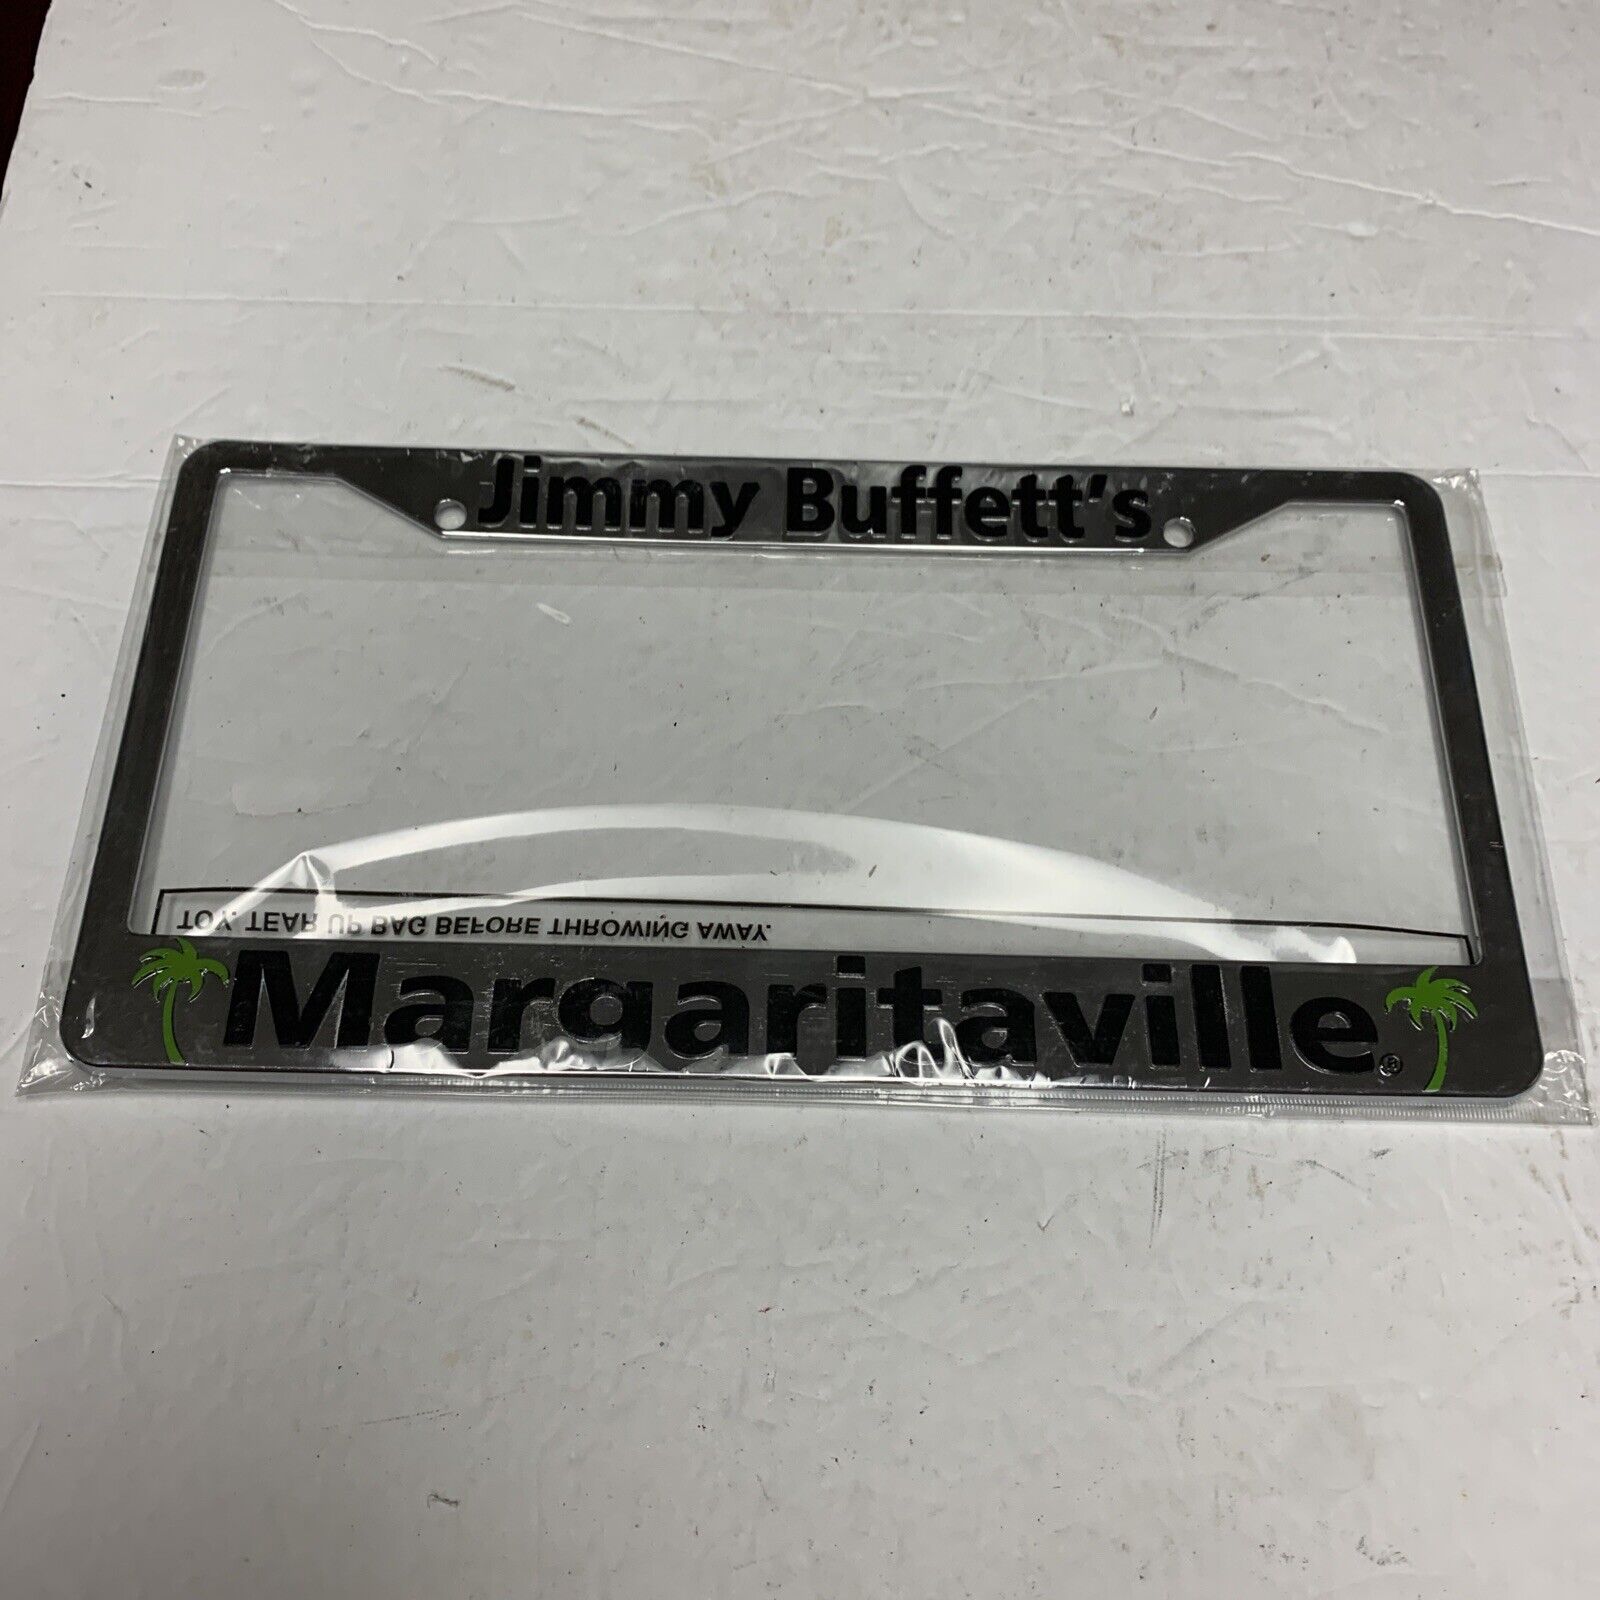 NOS JIMMY BUFFETT’S MARGARITAVILLE License Plate Frame Metal Excellent Cond 🌴